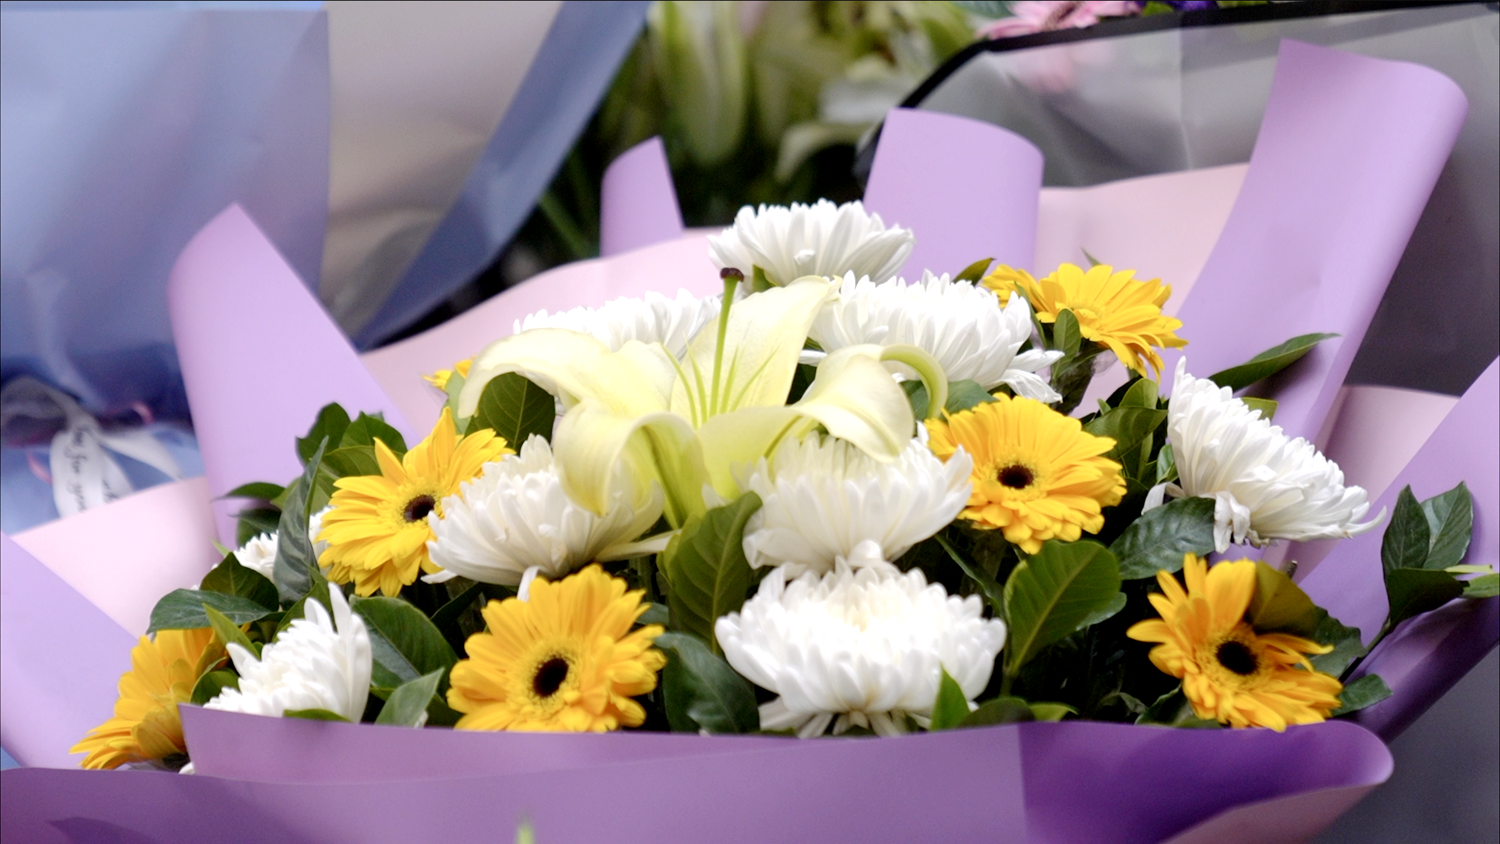 A chrysanthemum bouquet for sale /CGTN